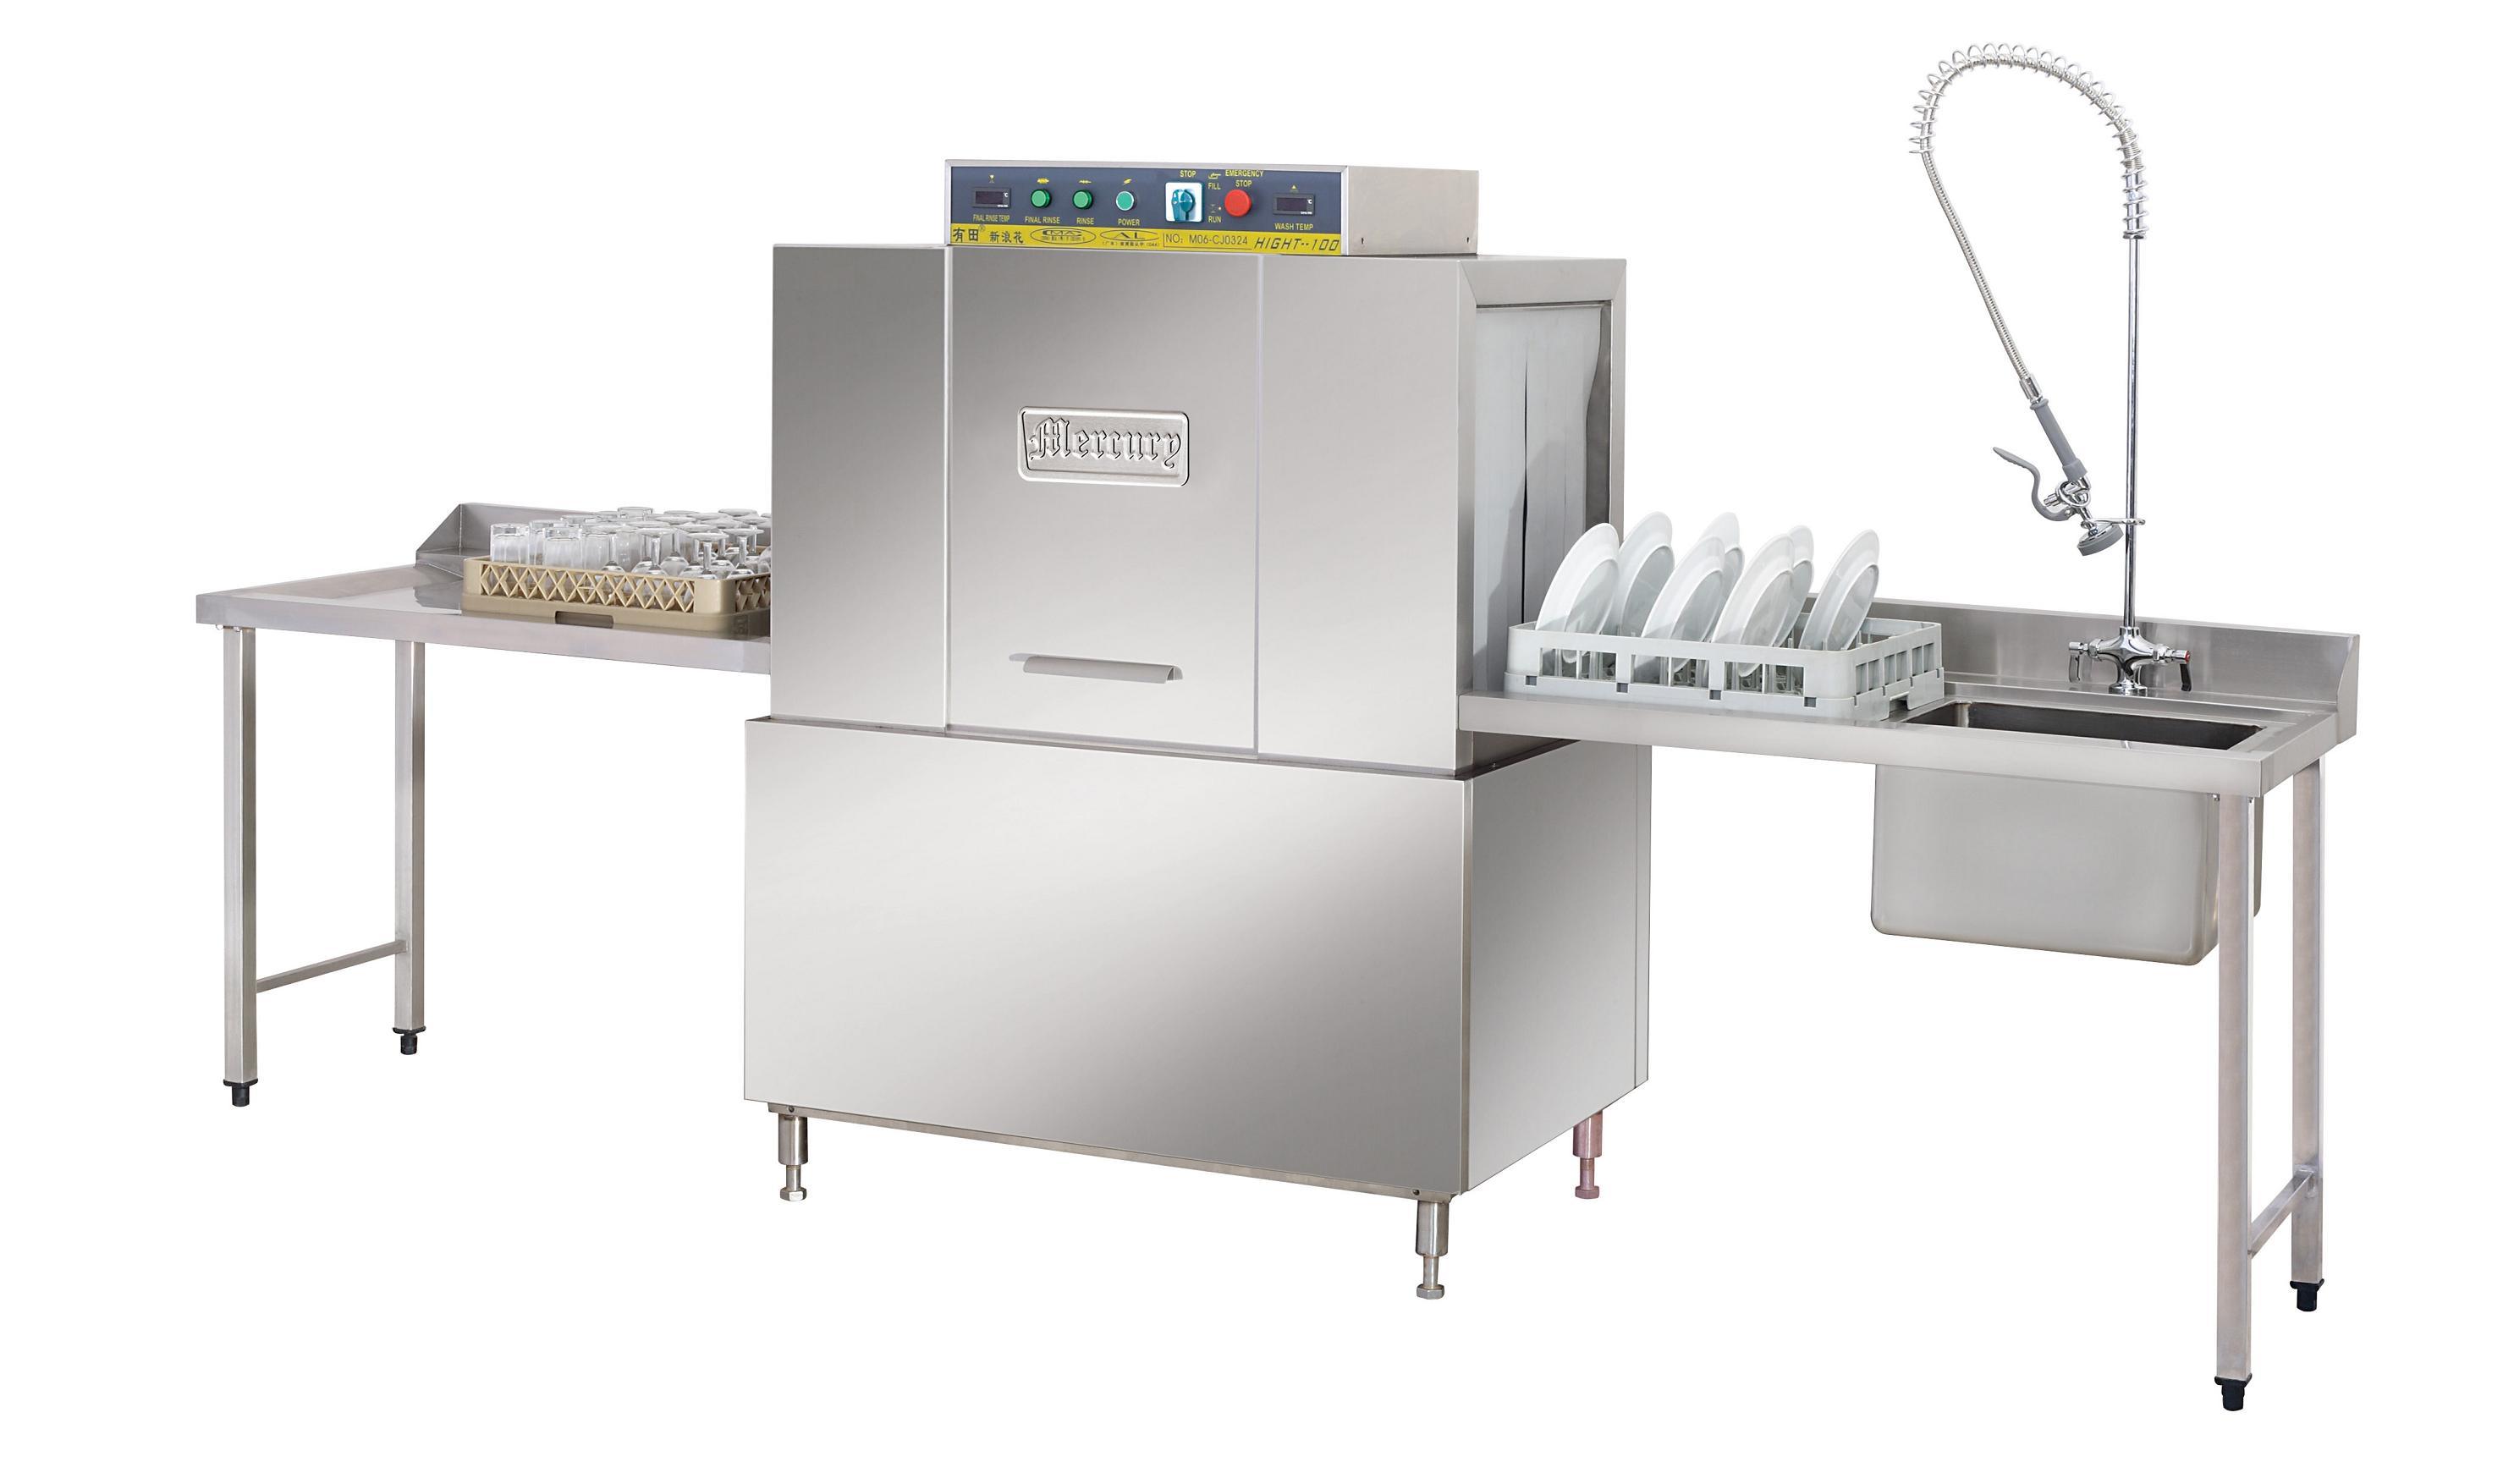 Conveyor Dishwasher (C100)